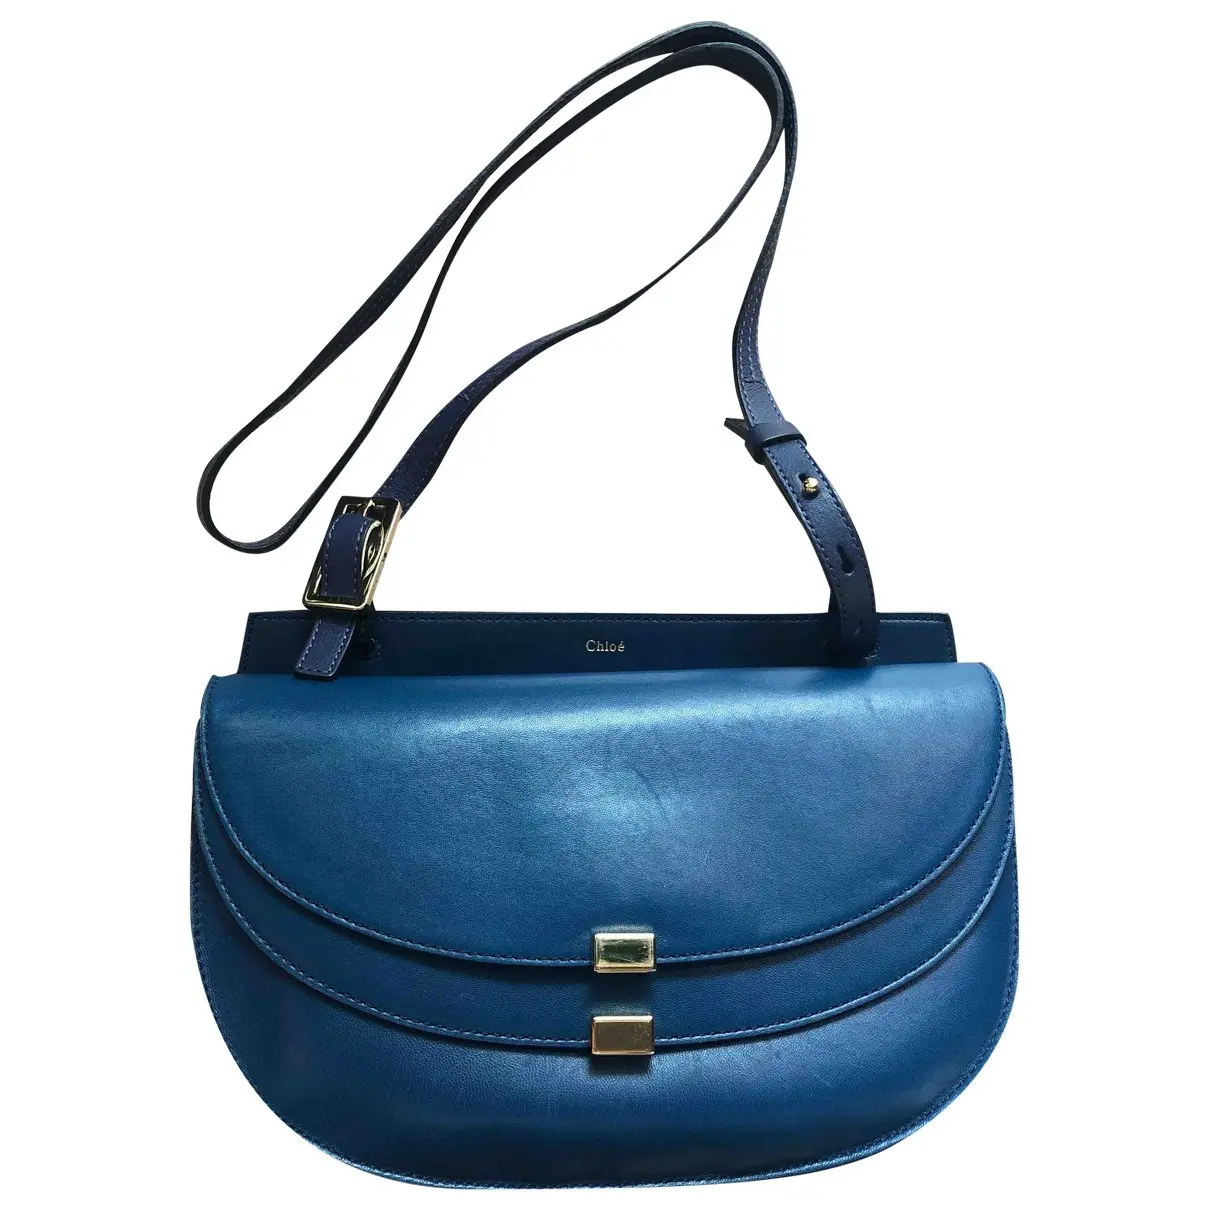 Georgia leather handbag Chloé